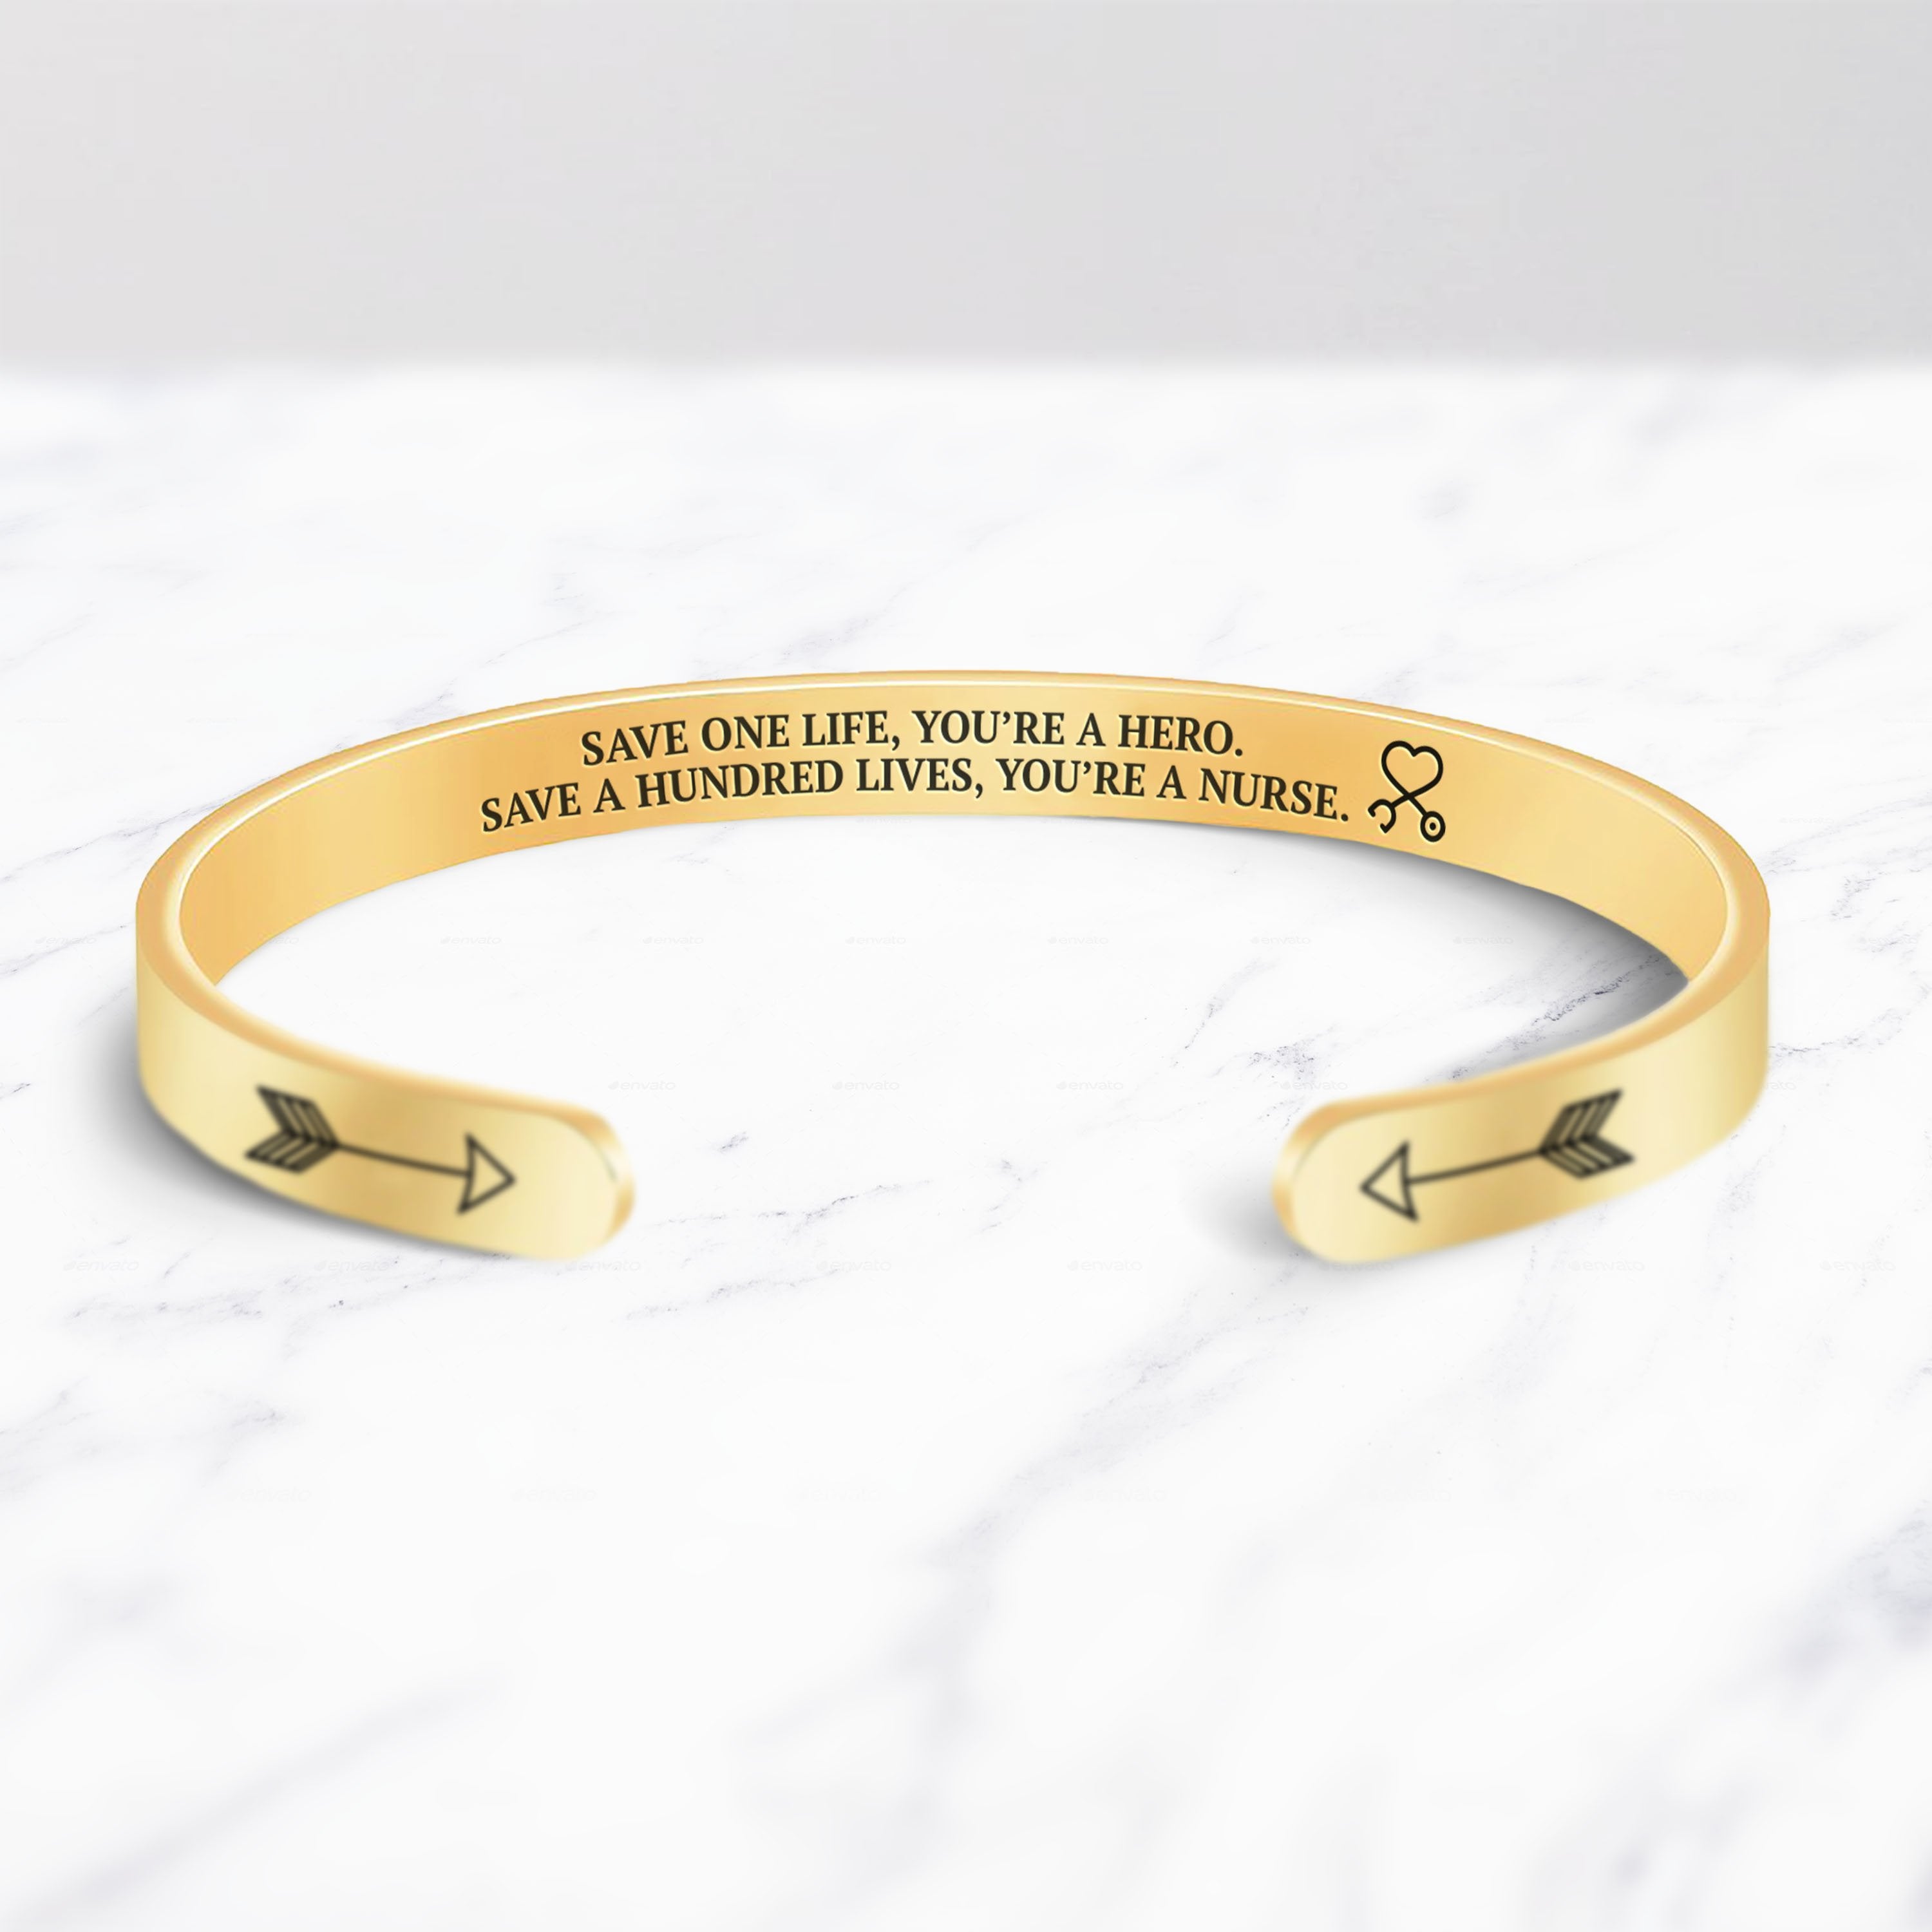 Save a hundred lives, You're a nurse Cuff Bracelet bracelet with gold plating on a marble background